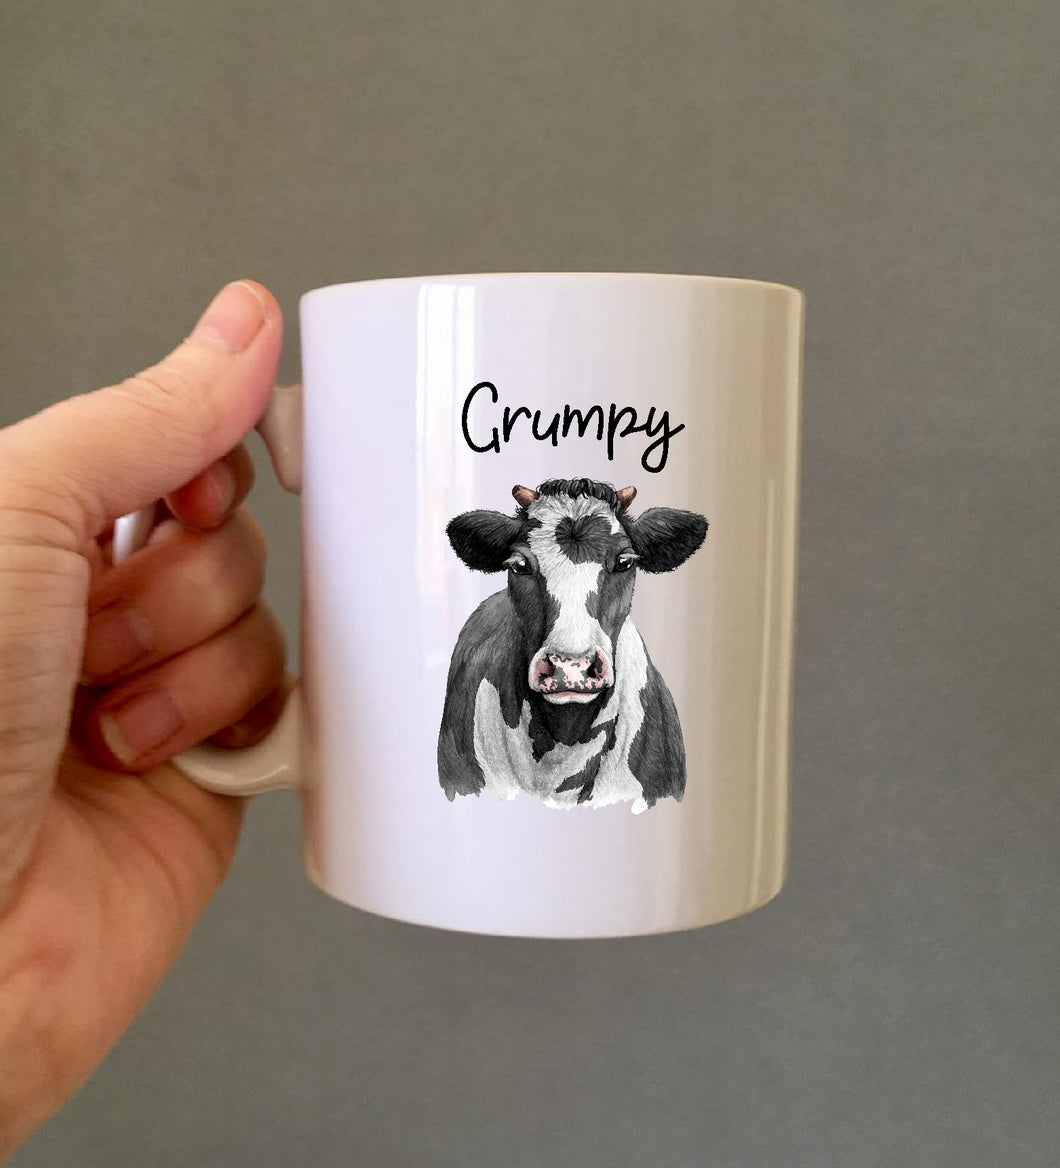 Grumpy Cow Ceramic Printed Mug